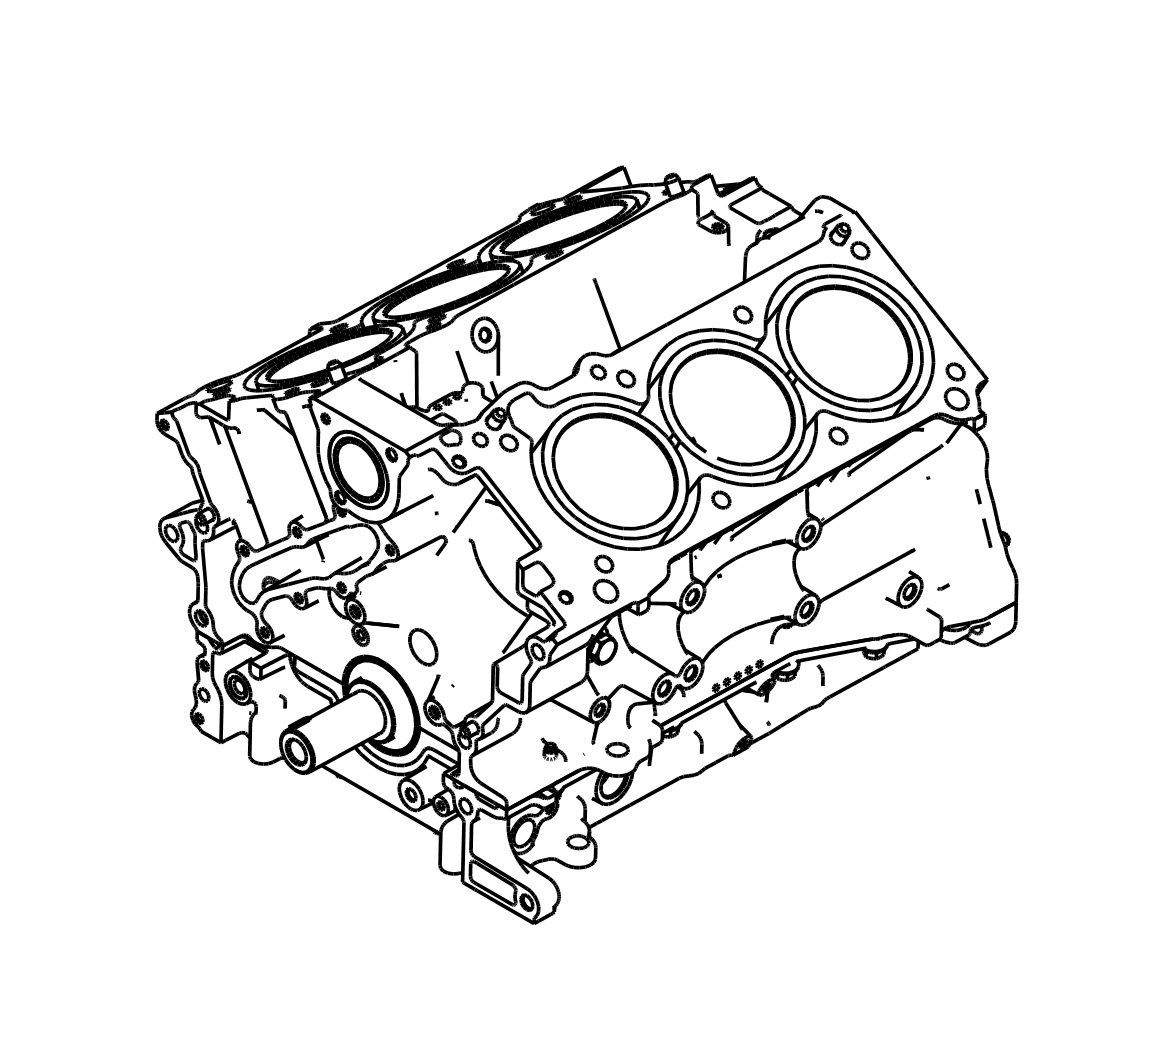 Infiniti OEM VR30DDTT Short Block Engine Assembly - Q50 V37, Q60 CV37